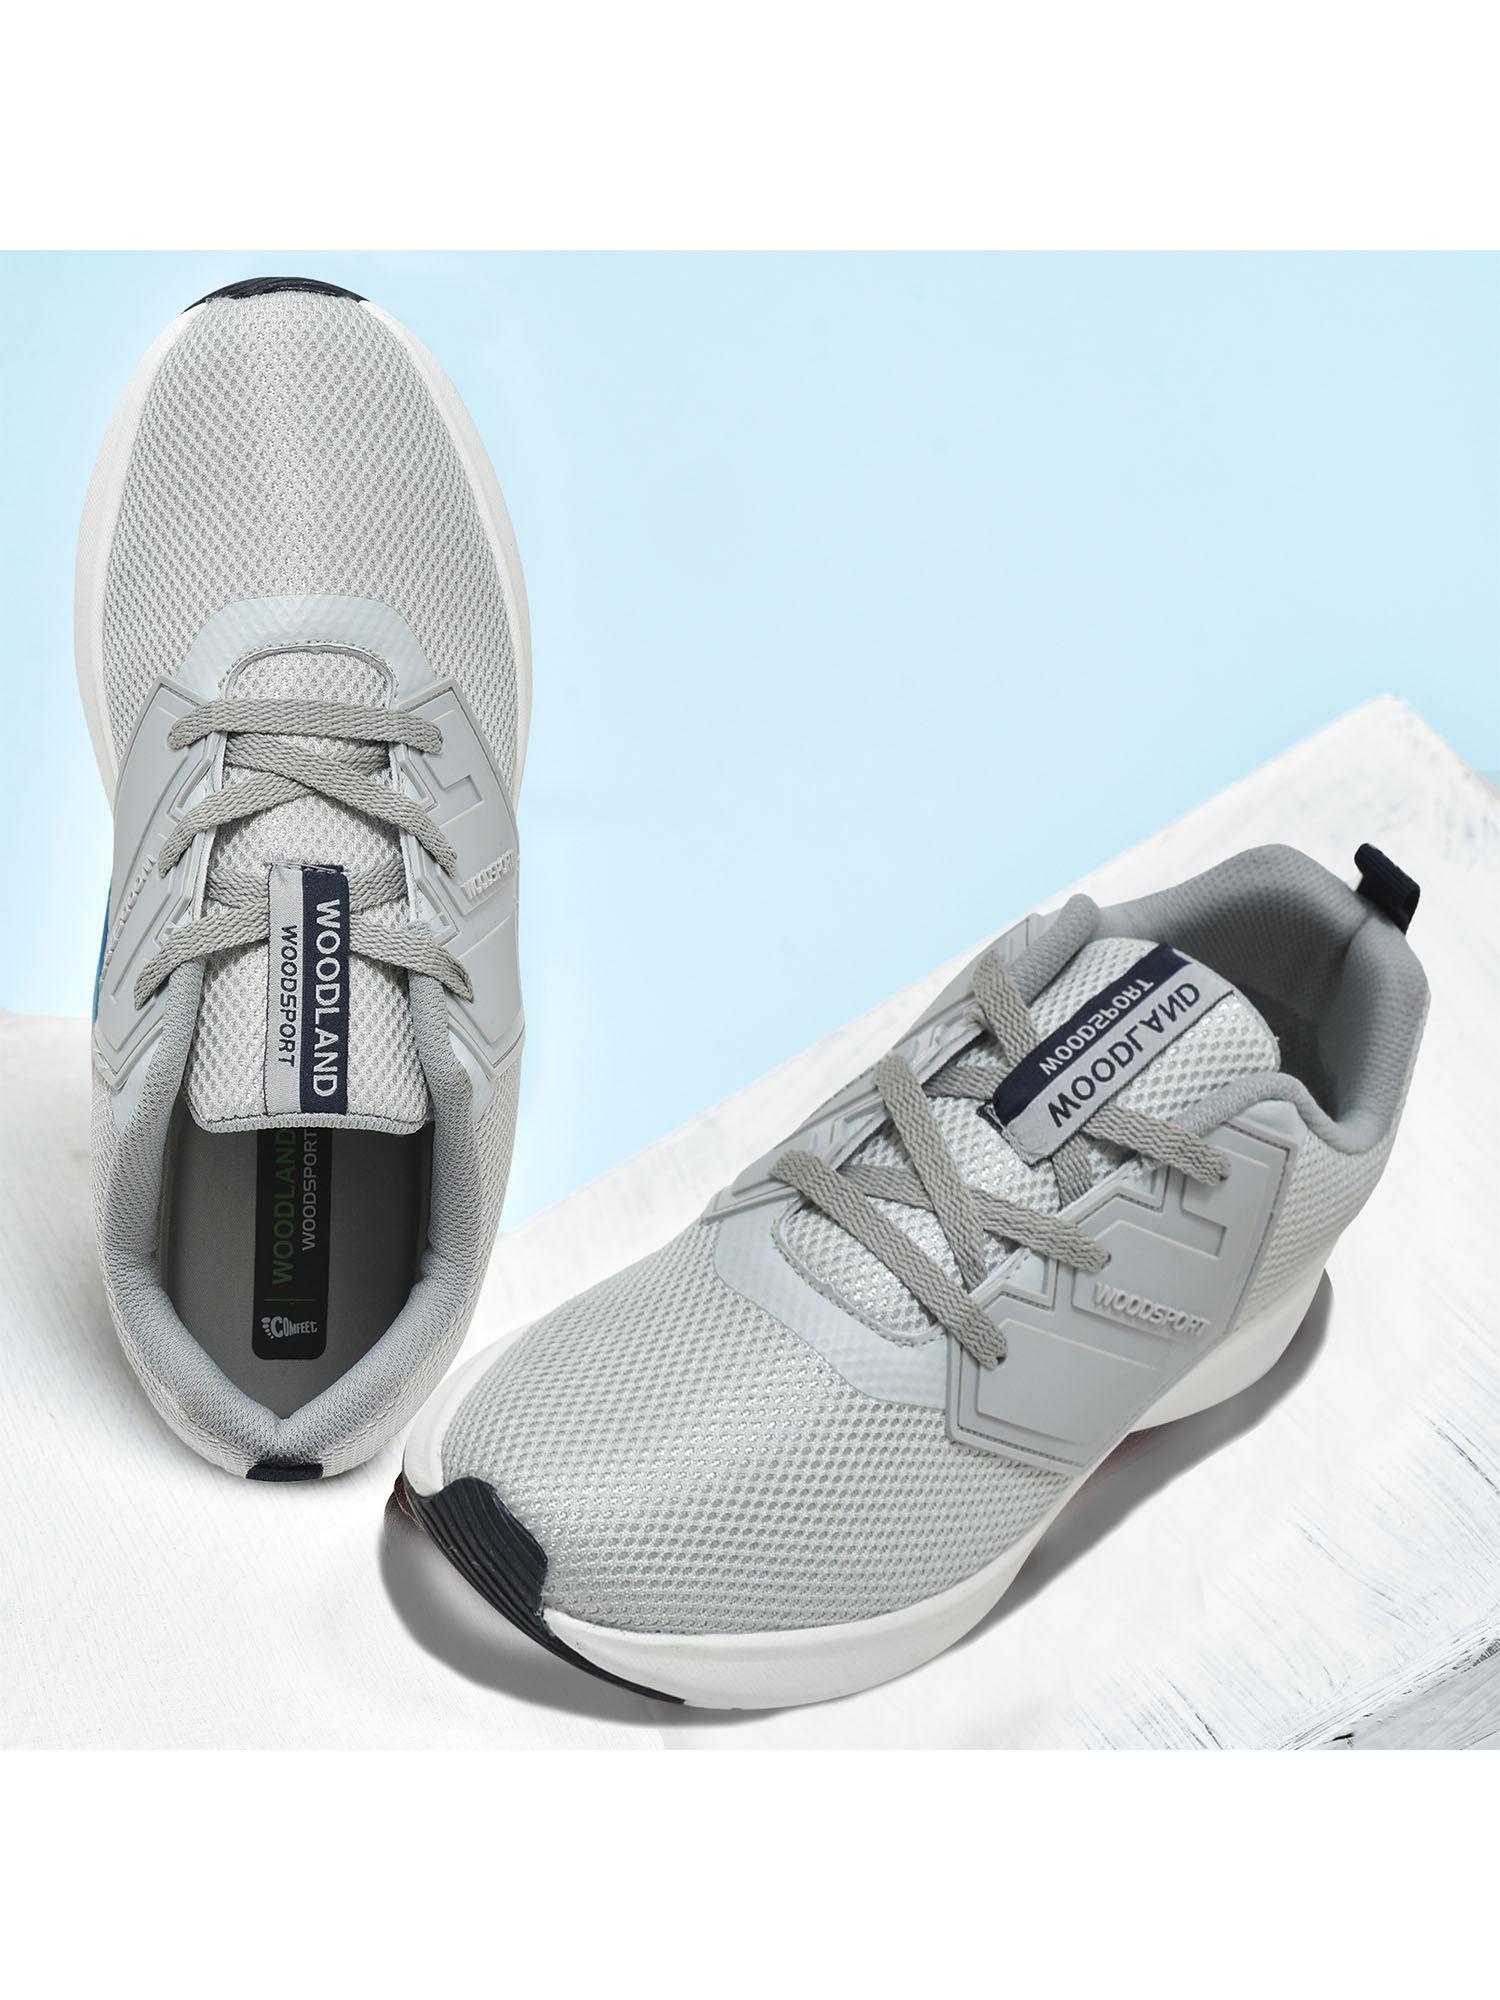 woodsport mens grey textured running shoes